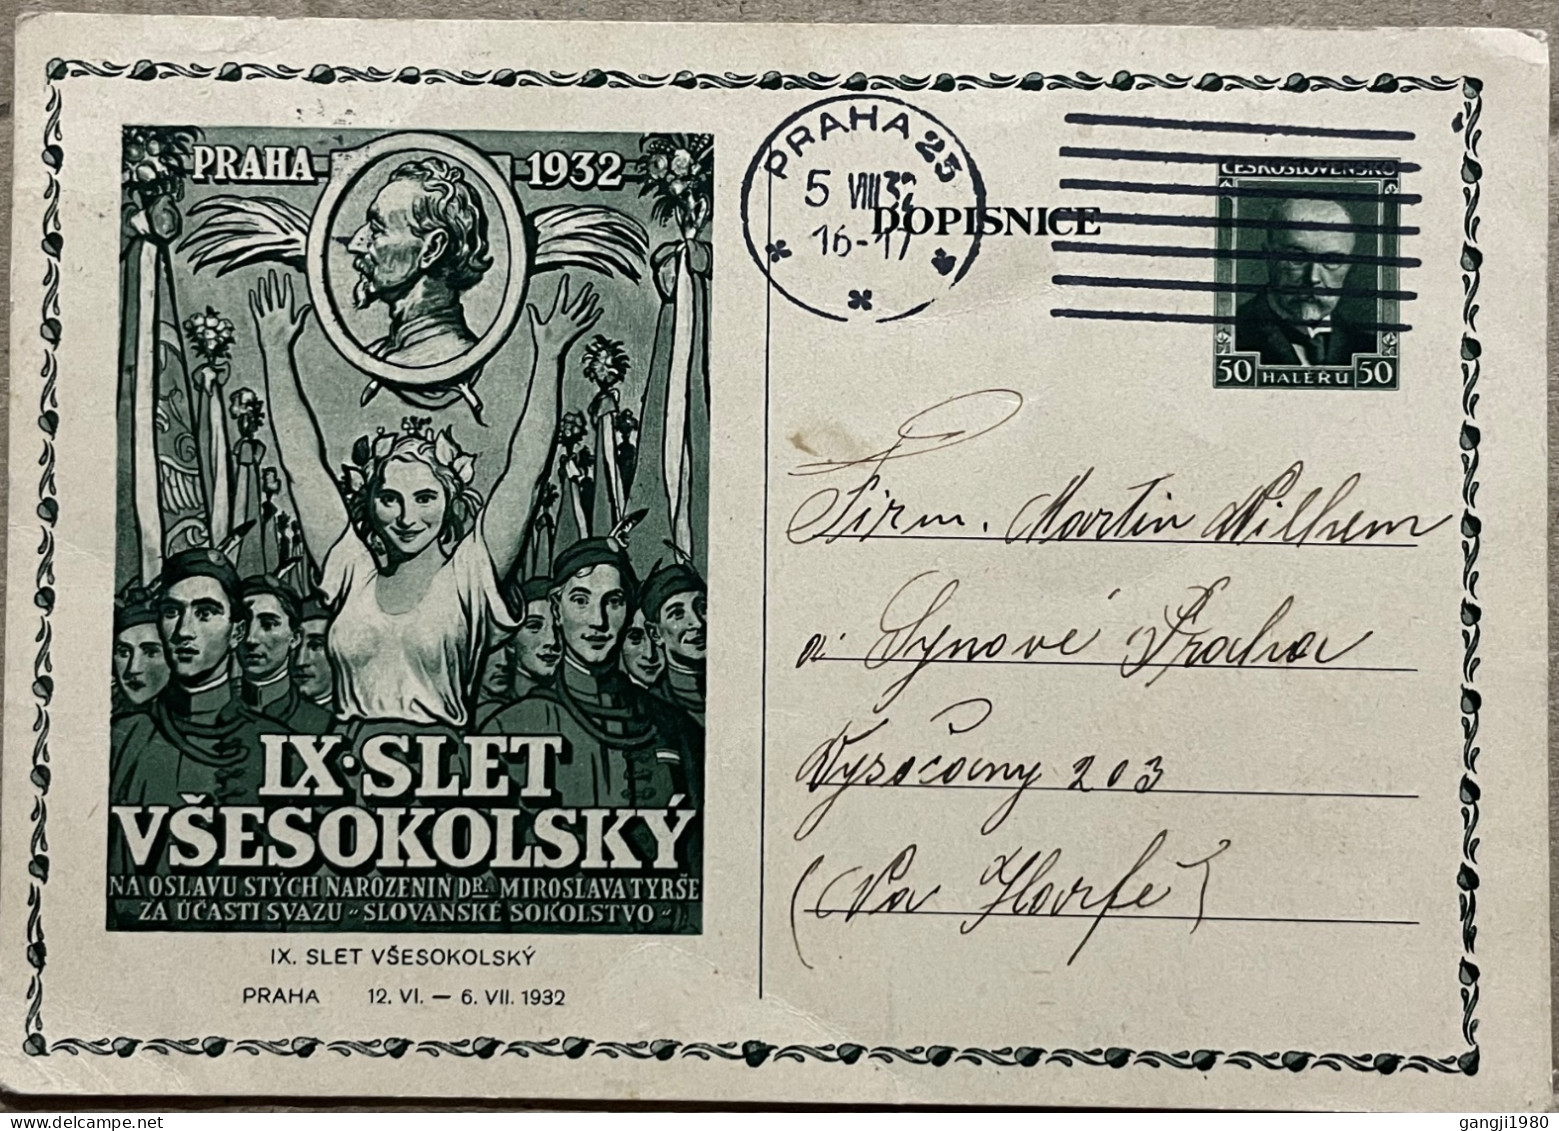 CZECHOSLOVAKIA 1932, STATIONERY CARD USED, ILLUSTRATE, WOMAN, CHARMING LADY, SLET YSESOKOLSKY, PRAHA CITY CANCEL - Storia Postale